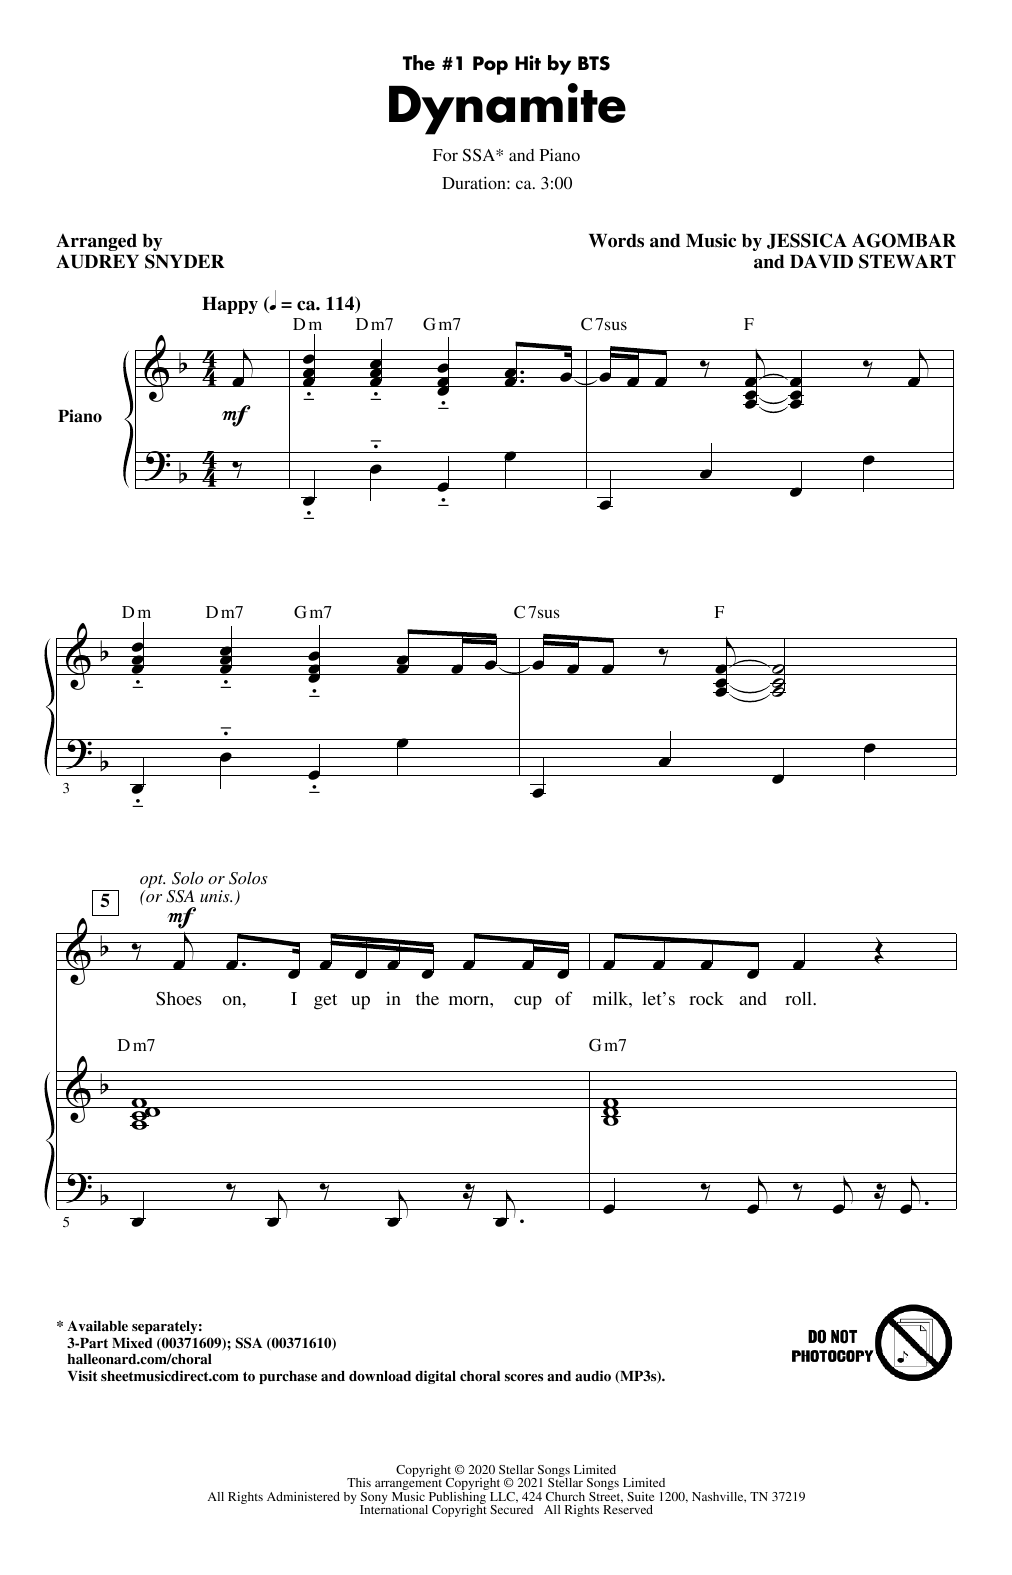 BTS Dynamite (arr. Audrey Snyder) Sheet Music Notes & Chords for SSA Choir - Download or Print PDF